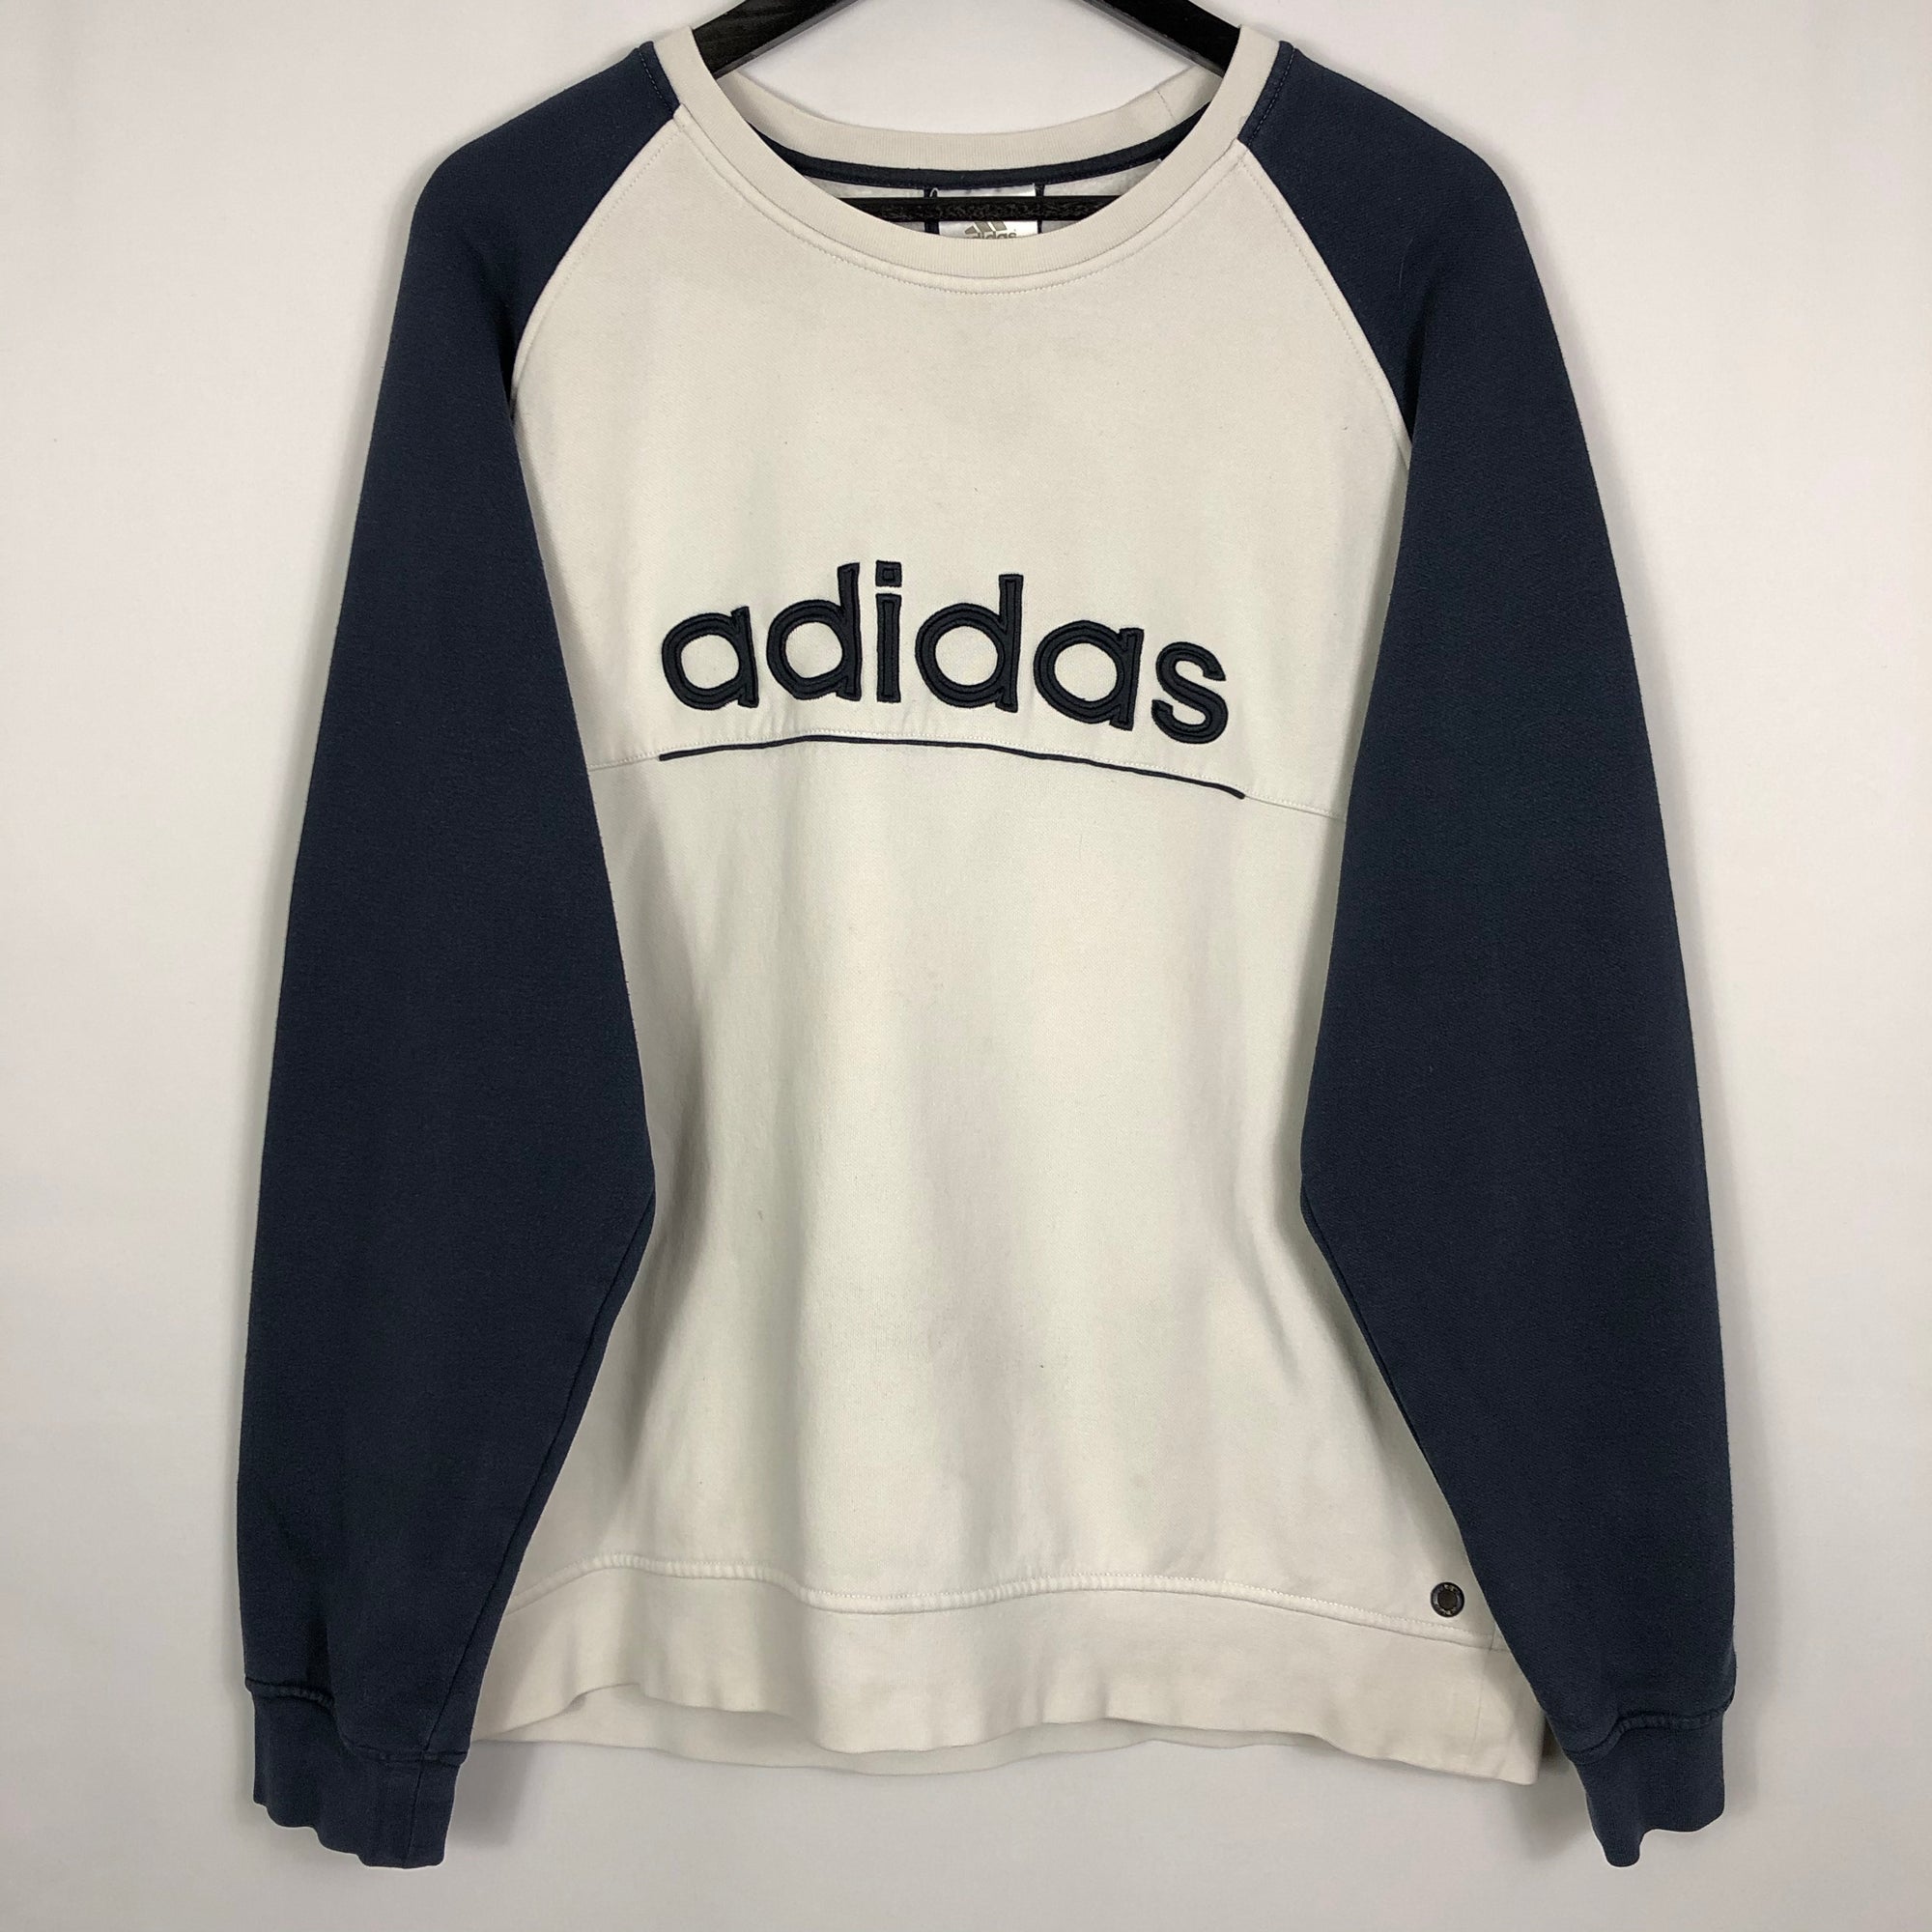 Vintage Adidas Spellout Sweatshirt in White & Navy - Men’s Large/Women’s XL